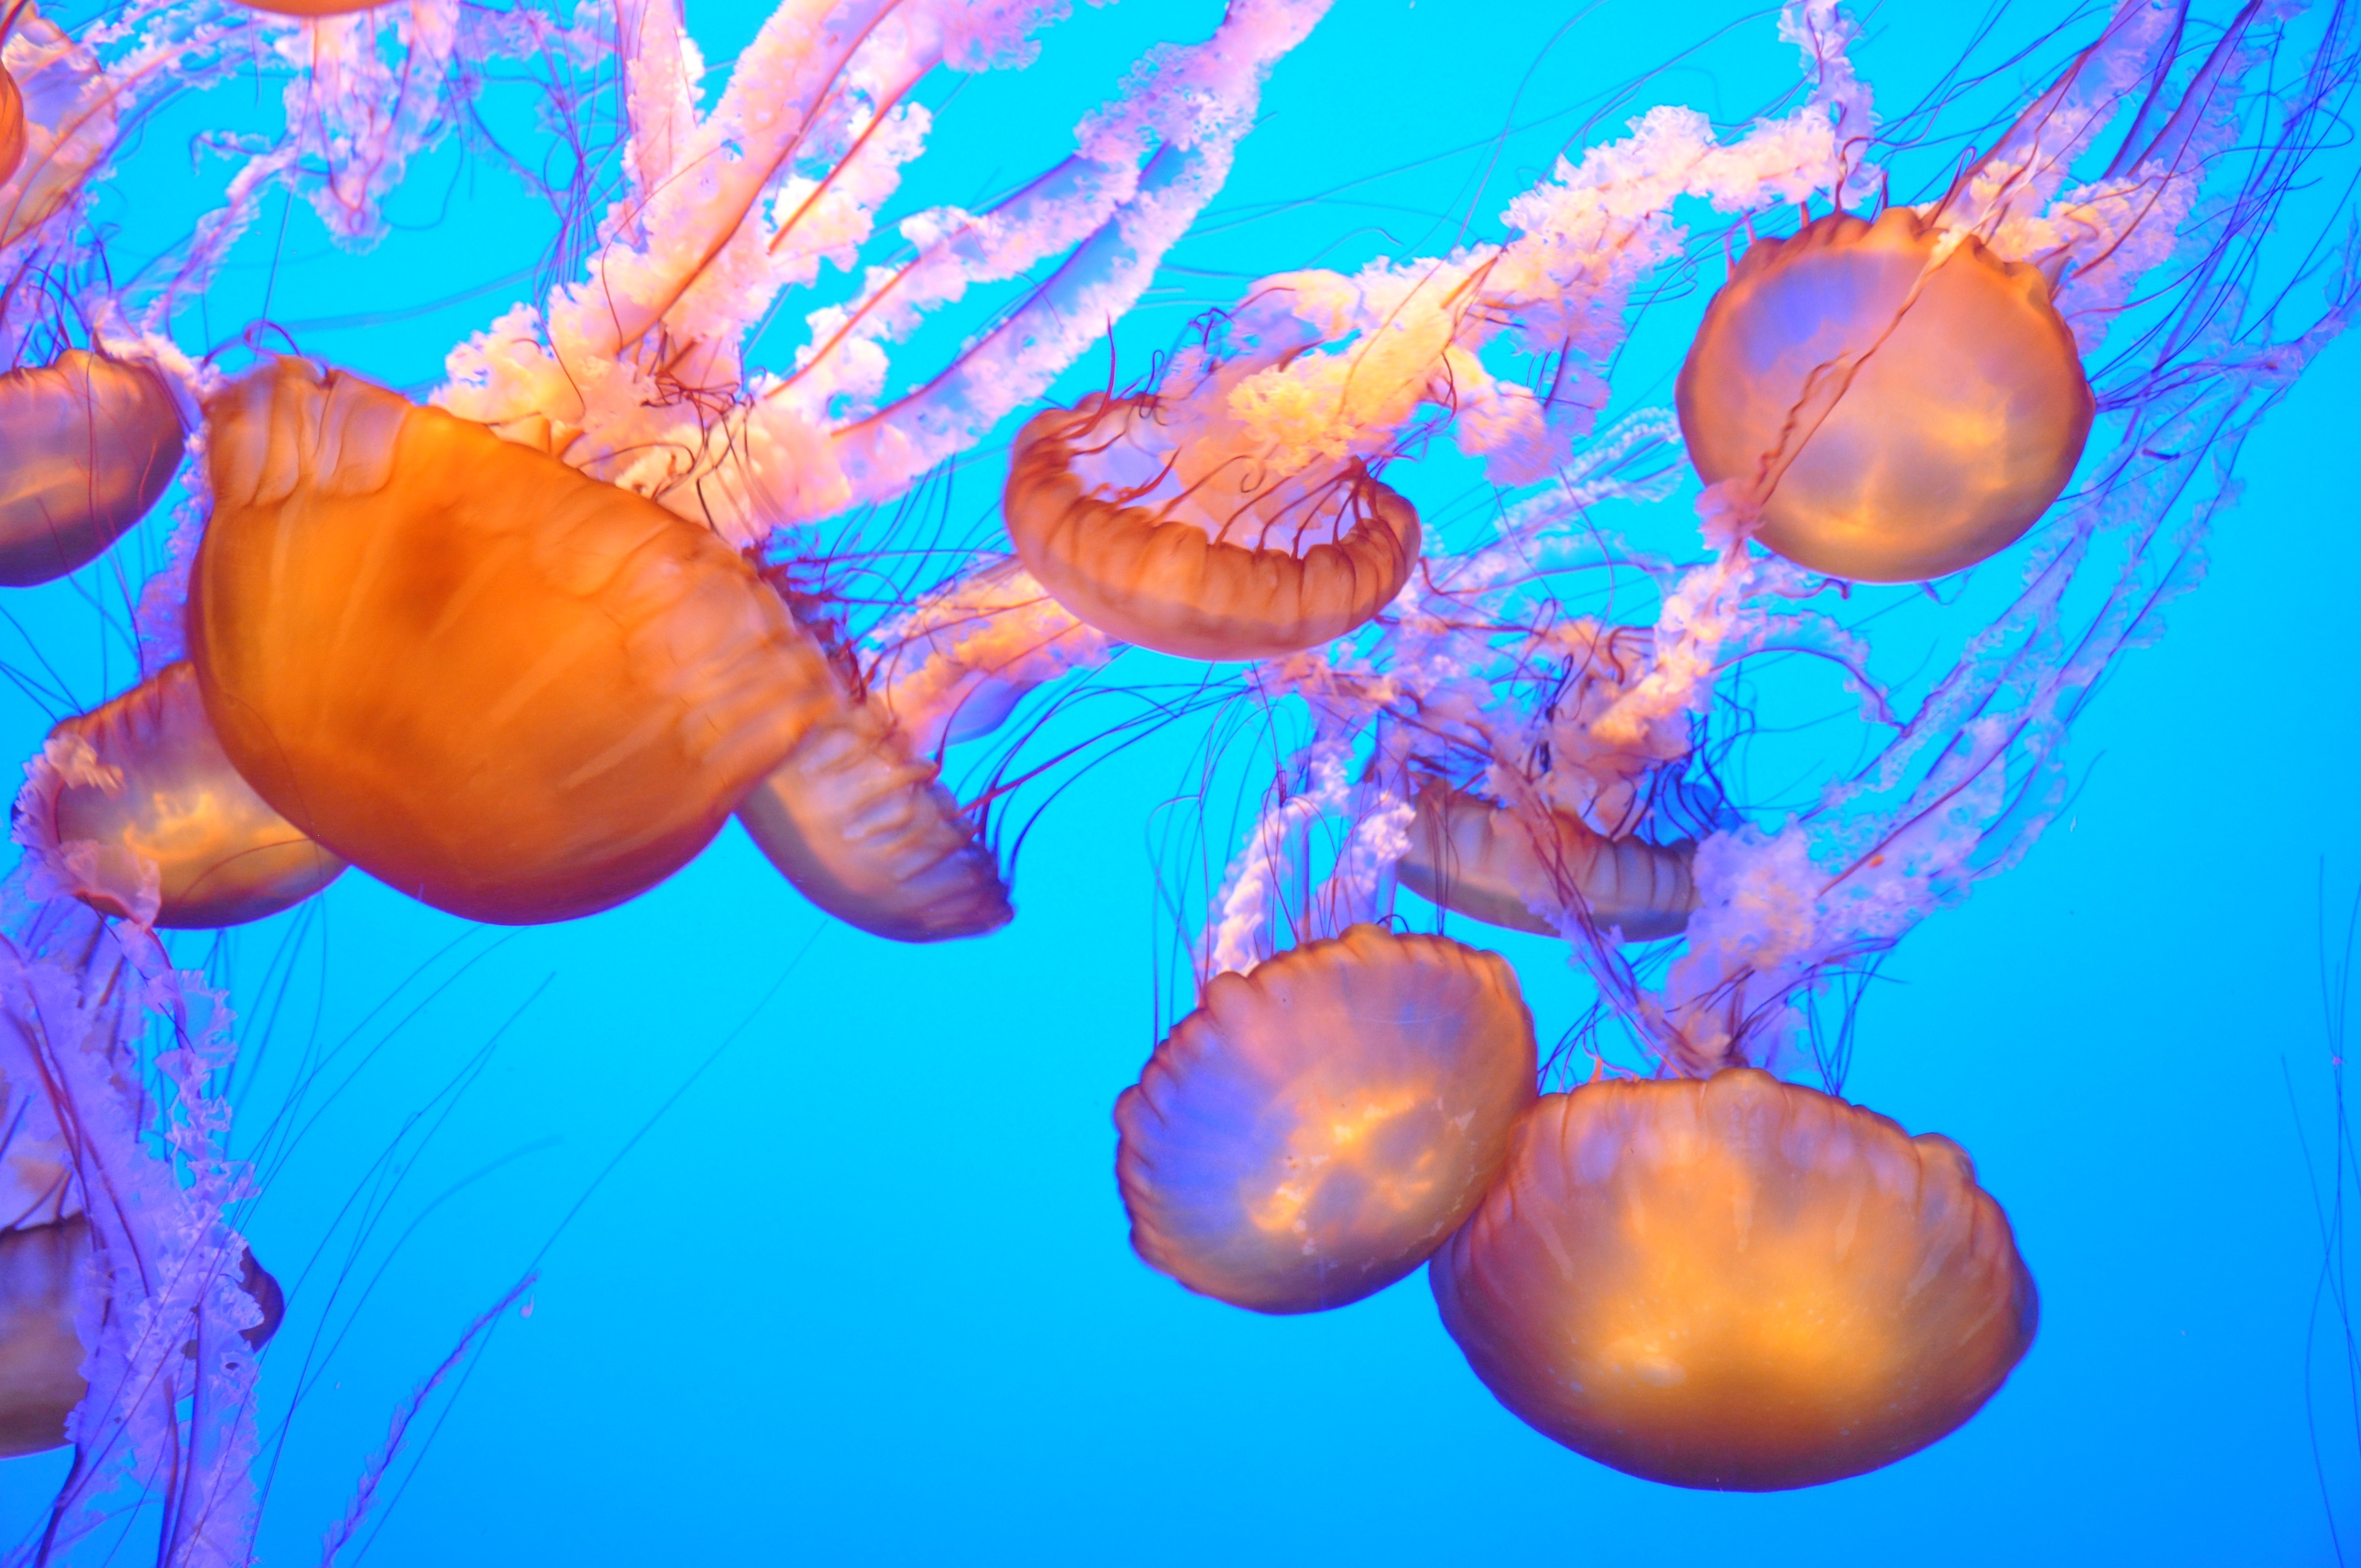 General 4288x2848 jellyfish water underwater nature sea animals